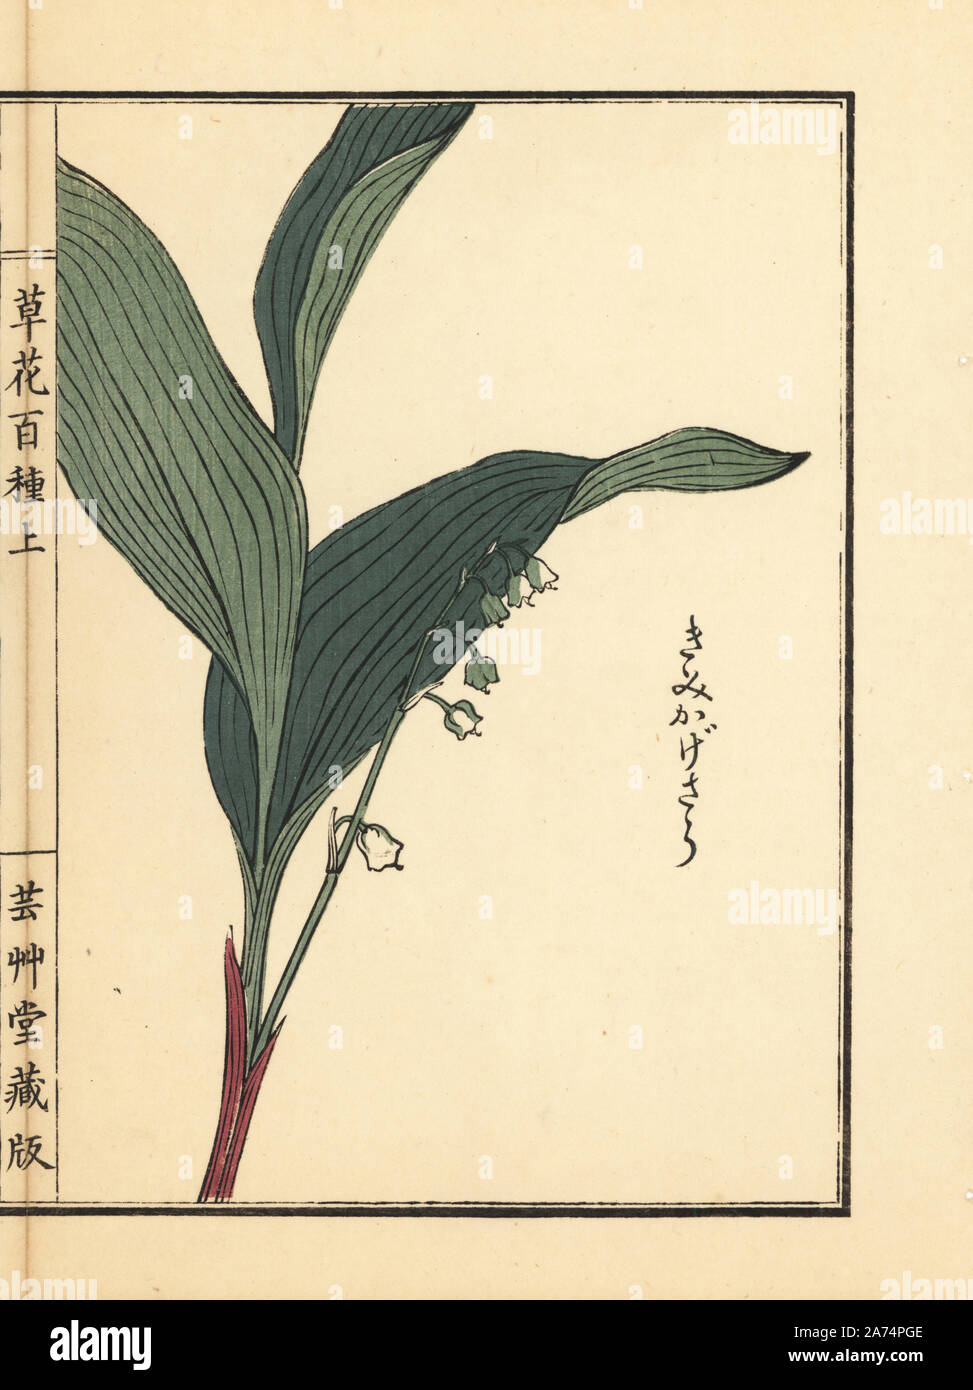 Kimikagesou, suzuran or lily of the valley, Convallaria majalis. Handcoloured woodblock print by Kono Bairei from Kusa Bana Hyakushu (One Hundred Varieties of Flowers), Tokyo, Yamada, 1901. Stock Photo